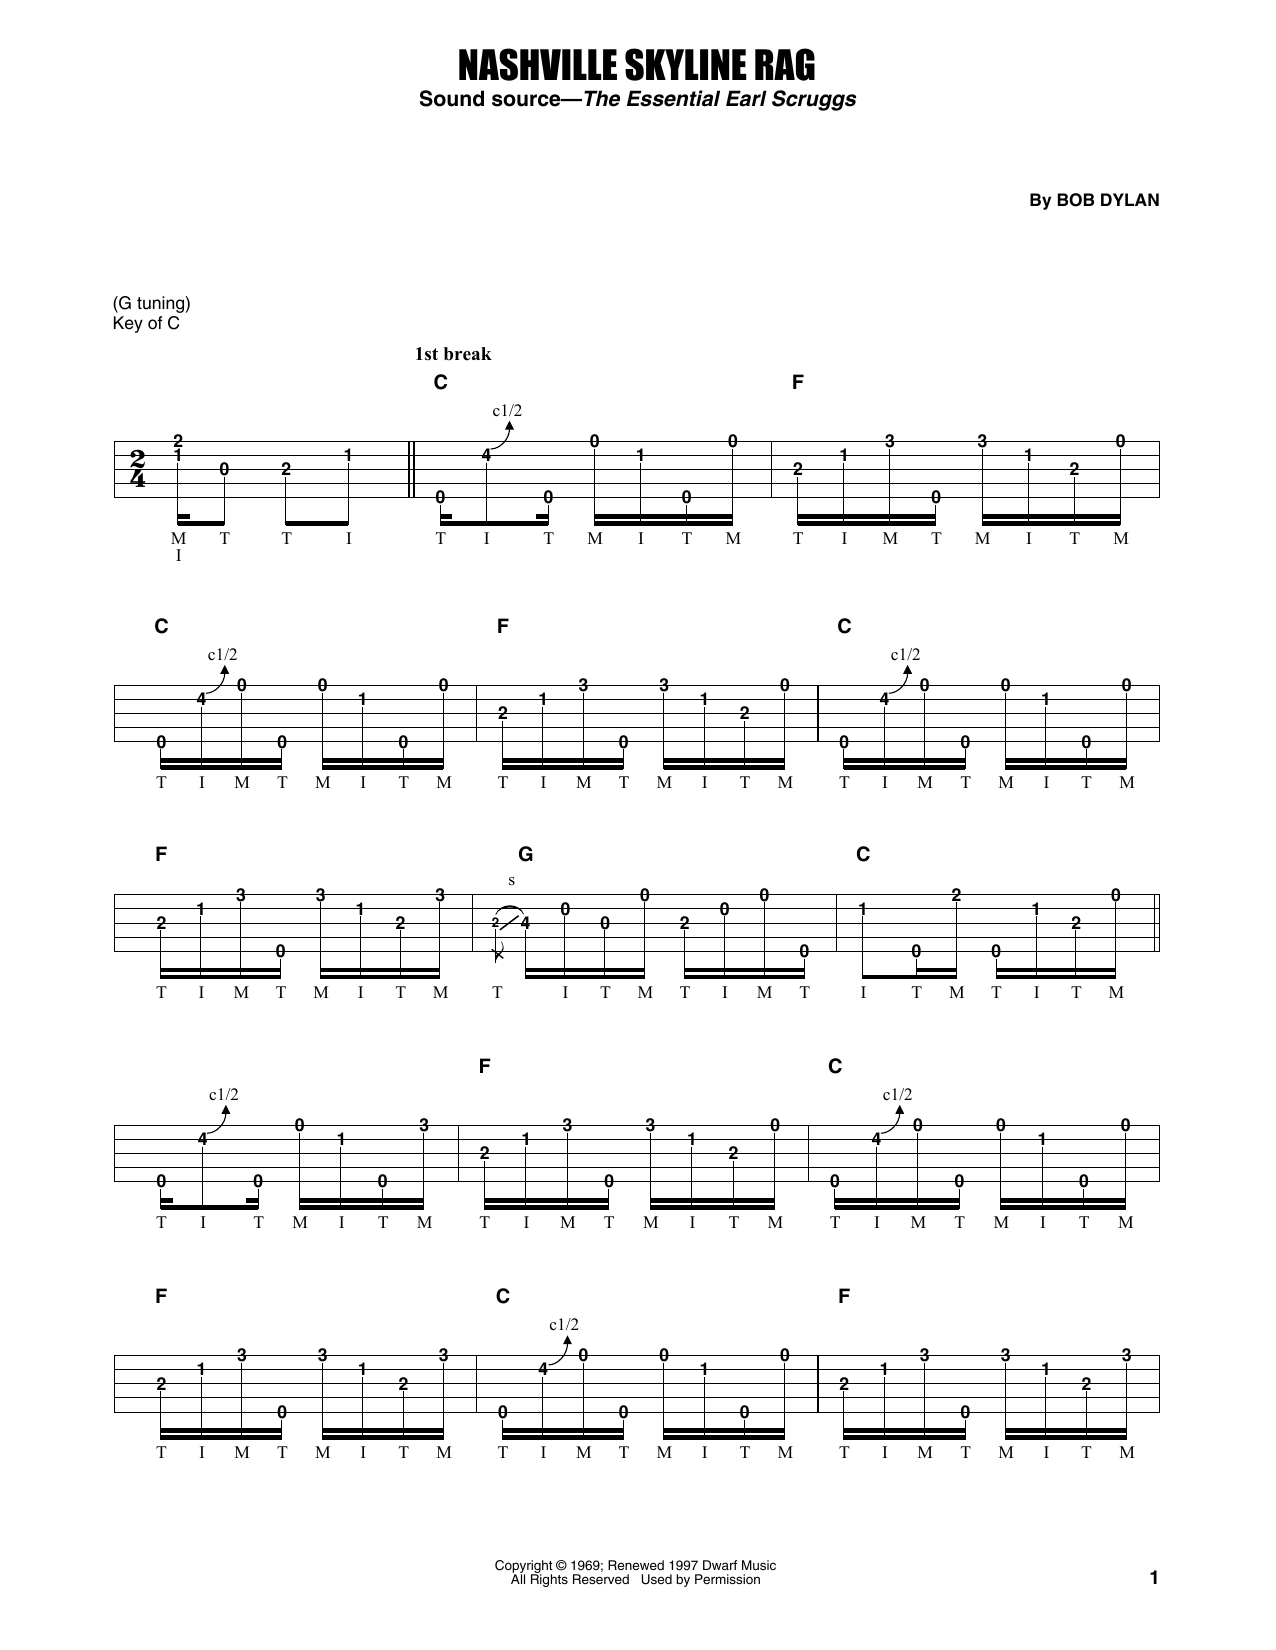 Flatt & Scruggs Nashville Skyline Rag sheet music notes and chords arranged for Banjo Tab